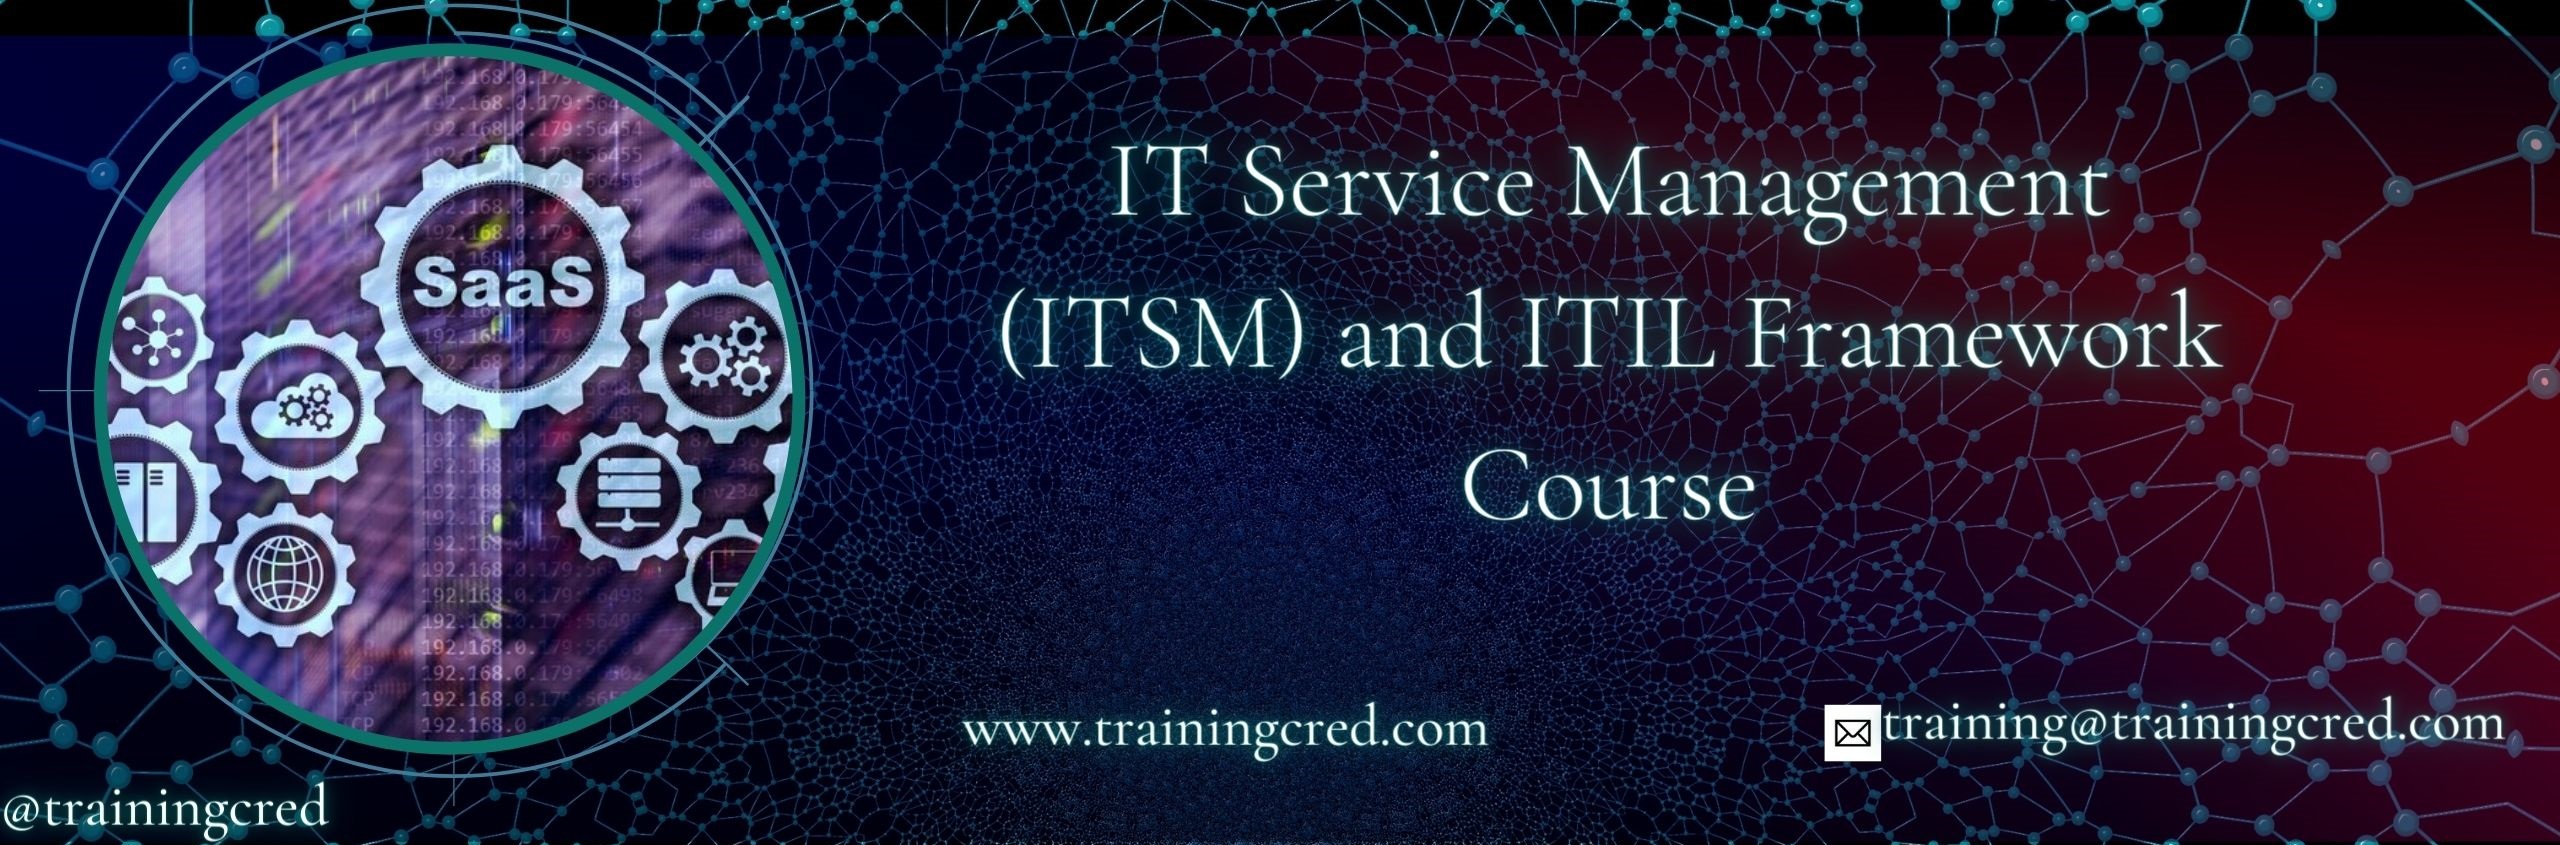 IT Service Management (ITSM) and ITIL Framework Training